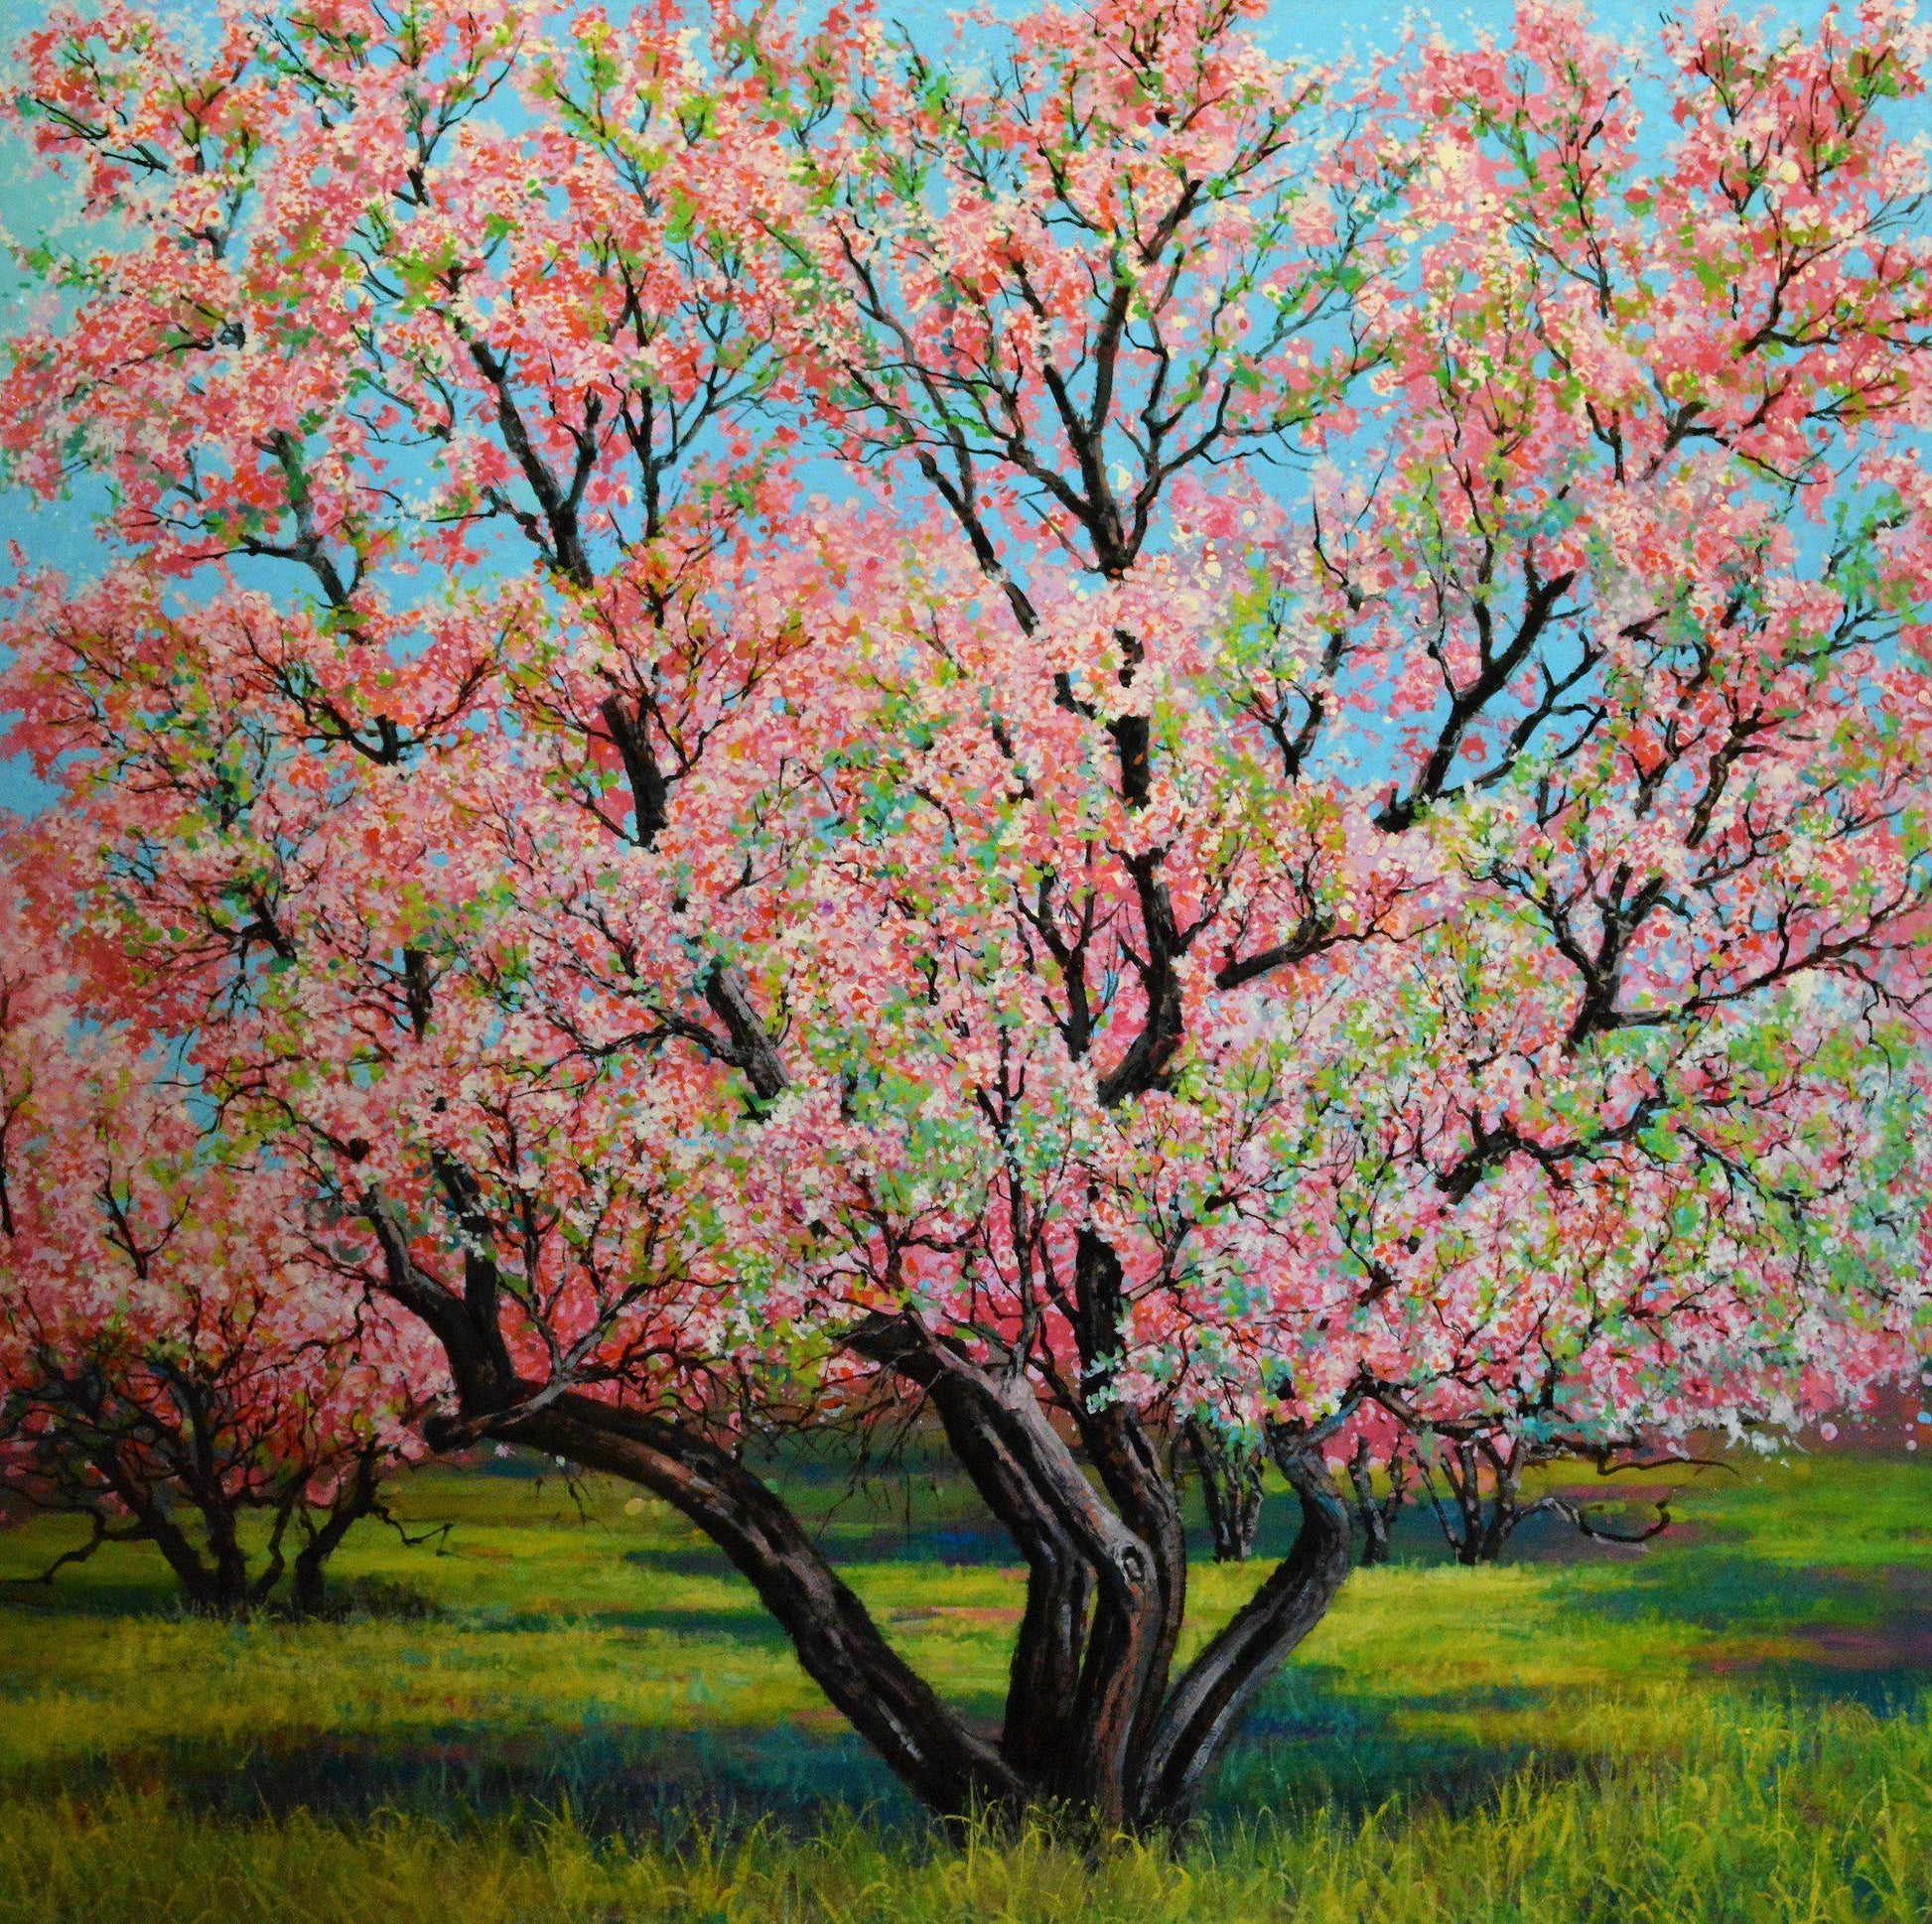 Apple Cherry Blossom-Painting-Roberto Ugalde-Sorrel Sky Gallery